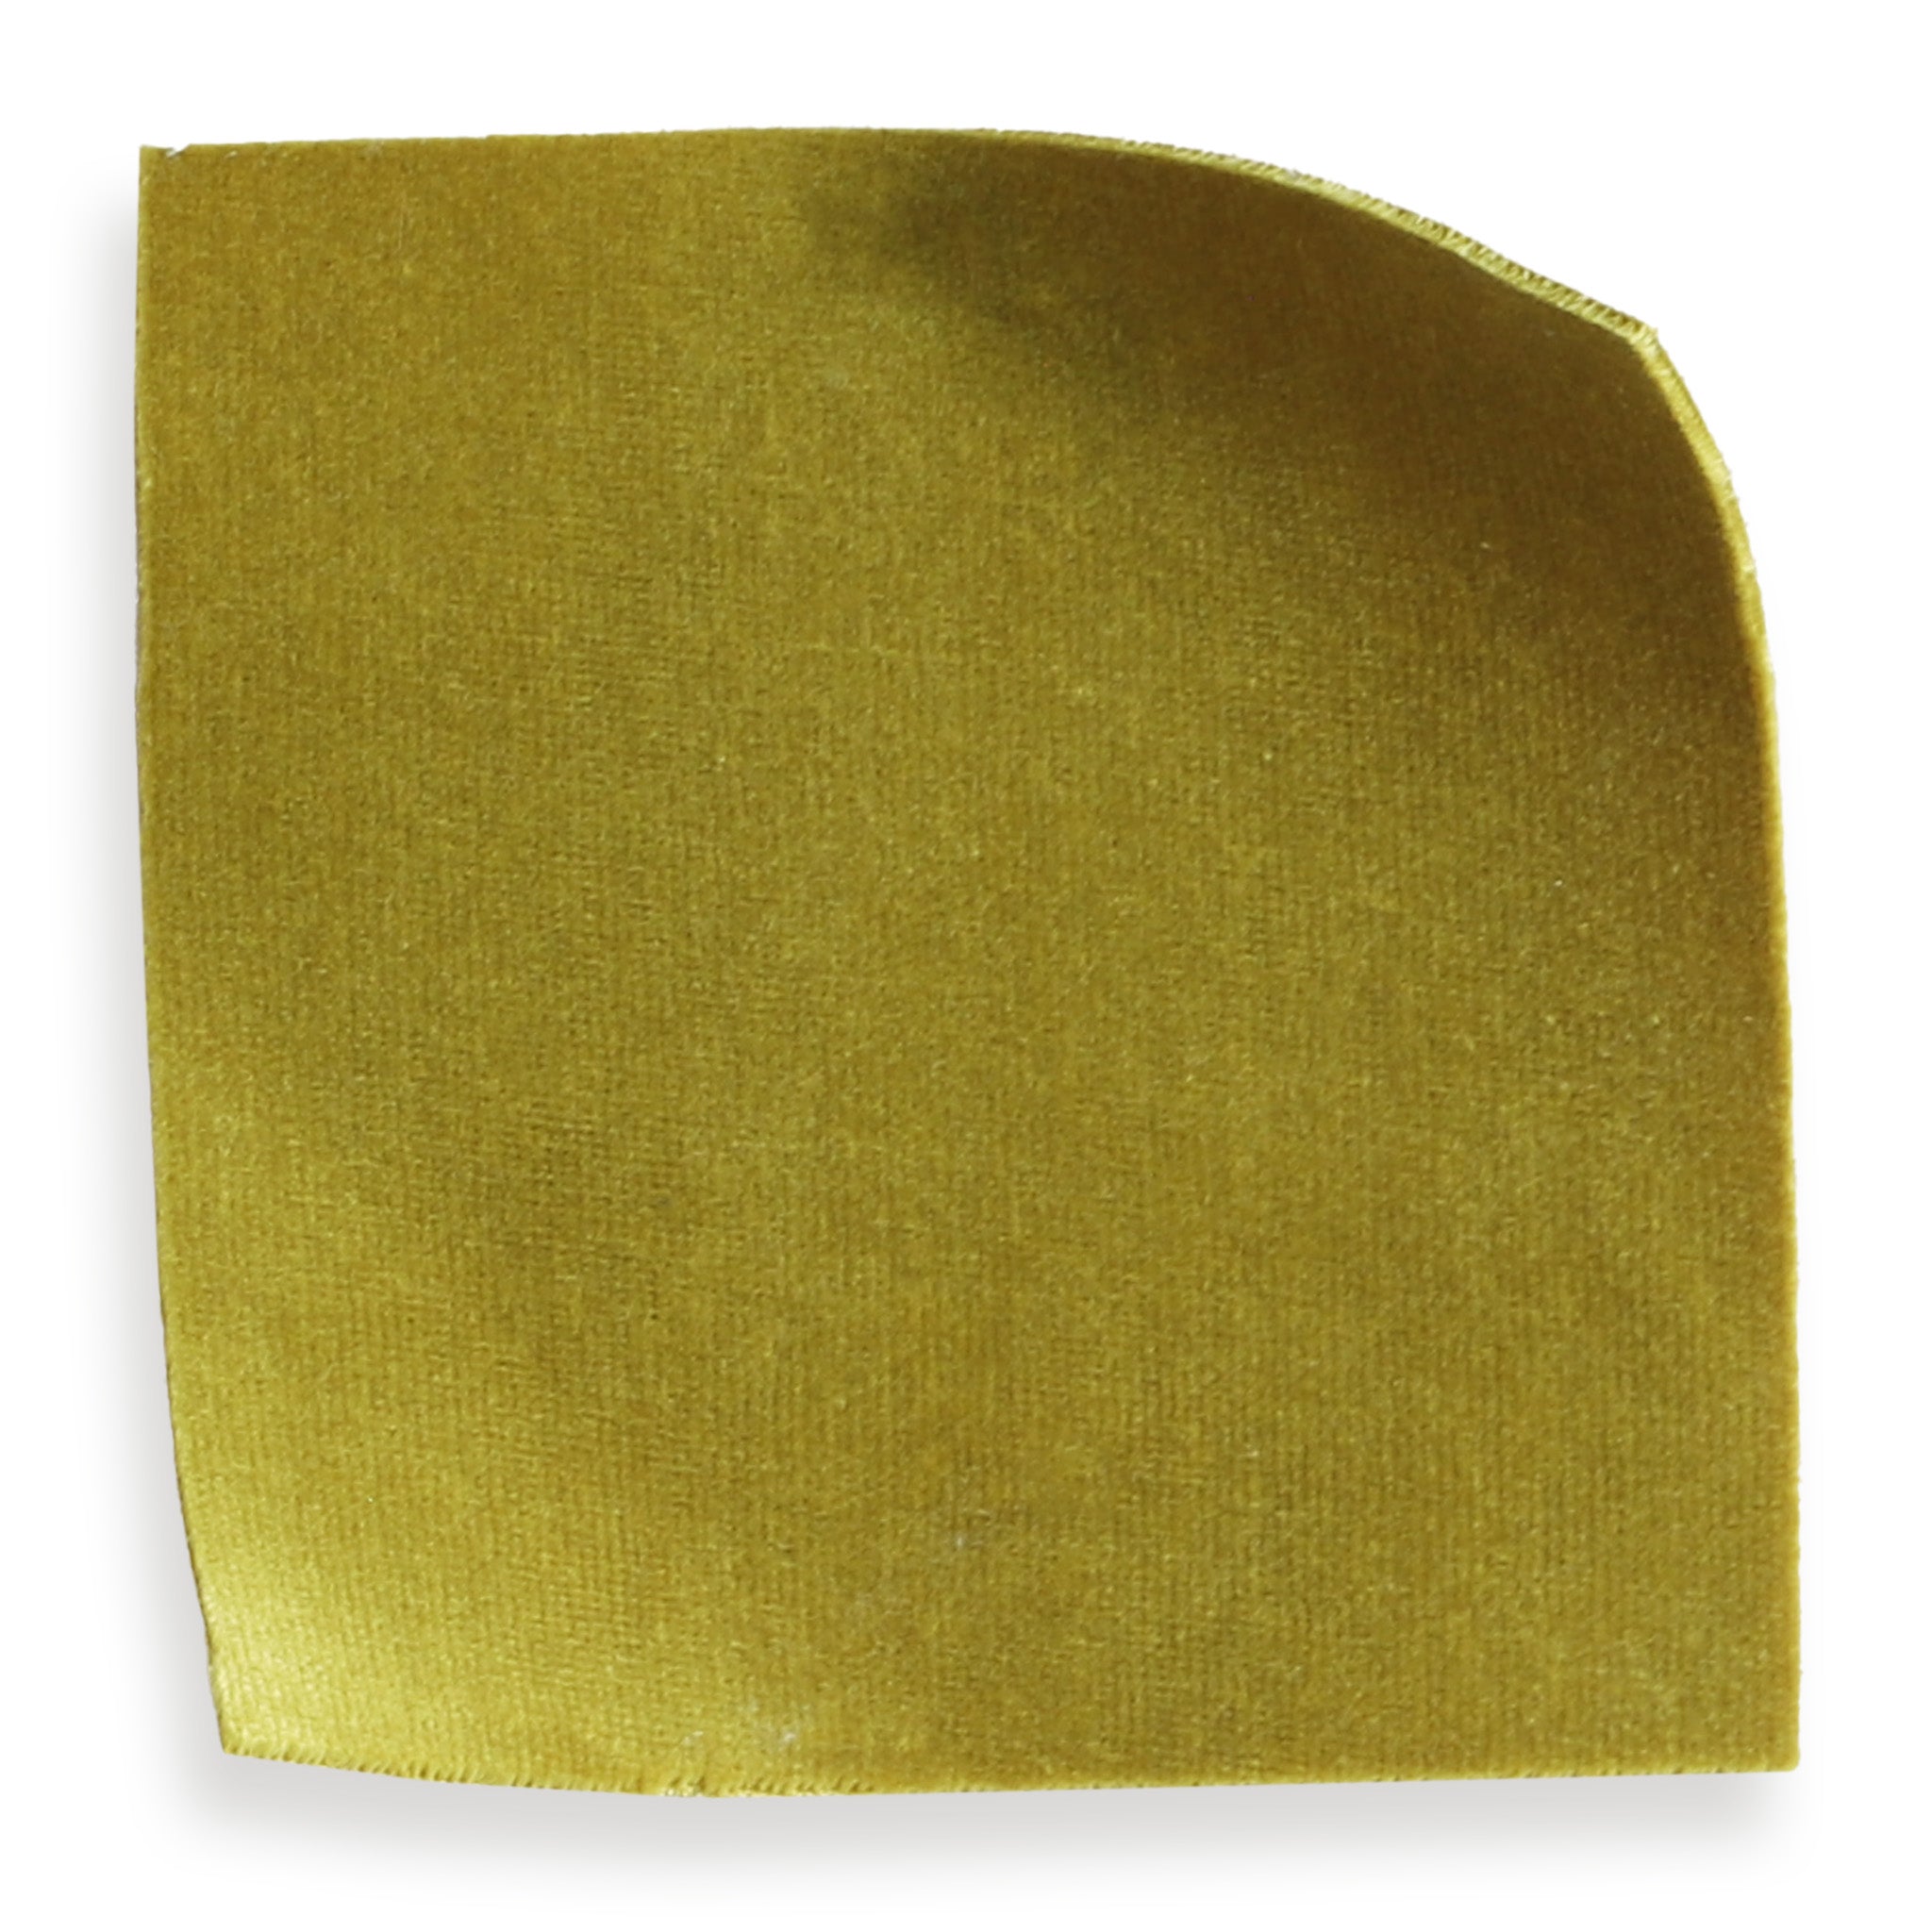 Golden chartreuse velvet fabric swatch